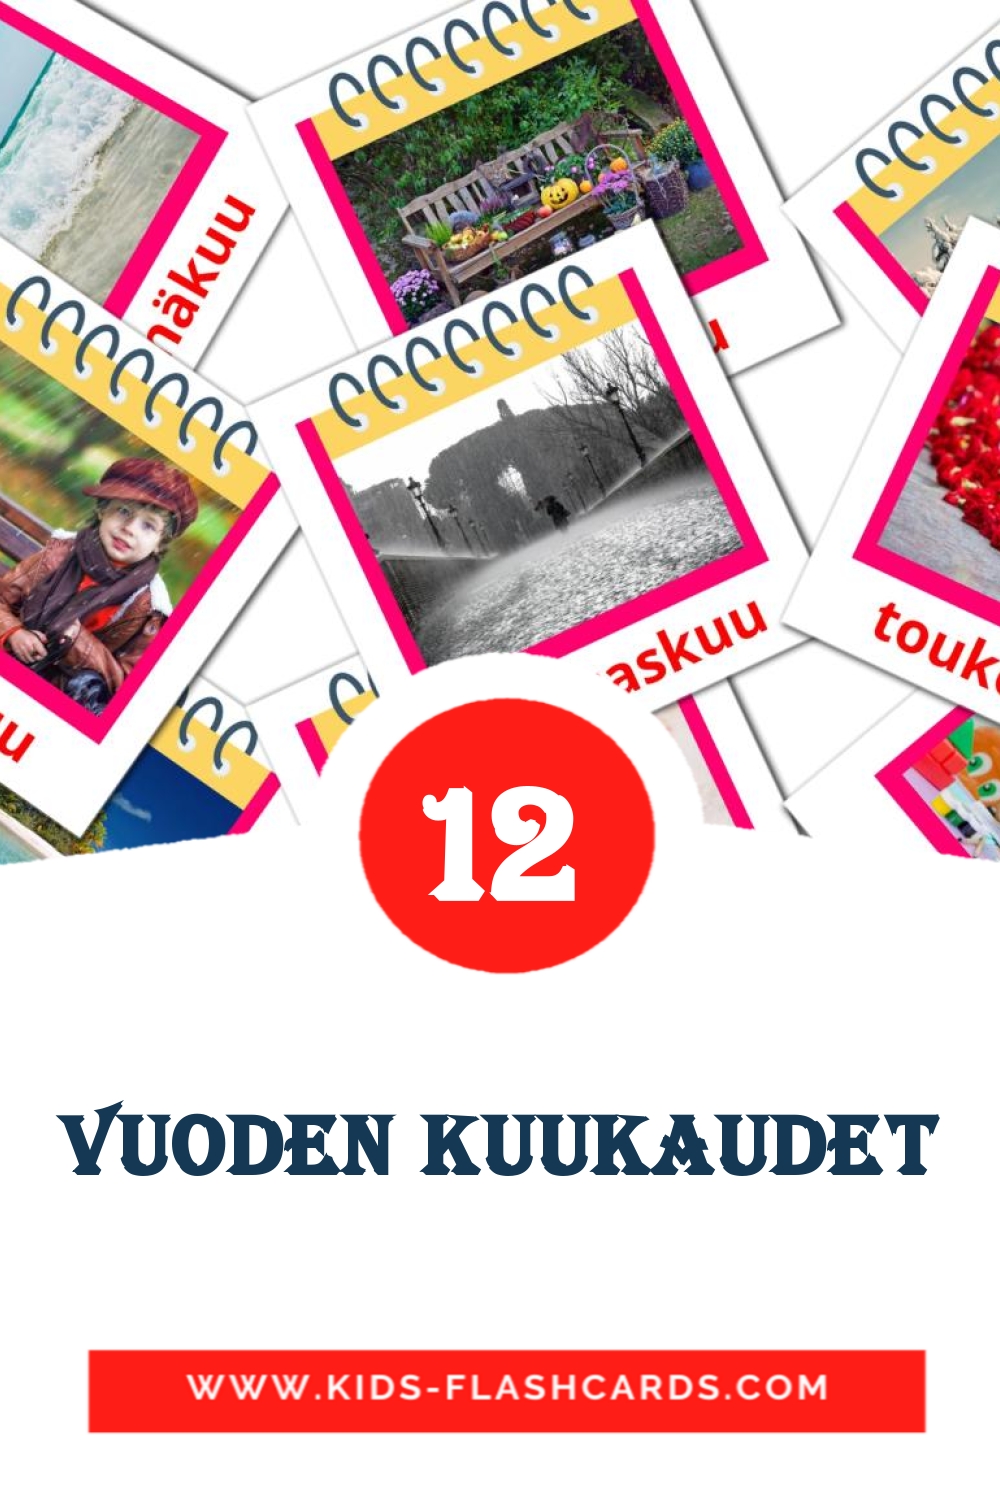 Vuoden kuukaudet на финском для Детского Сада (12 карточек)